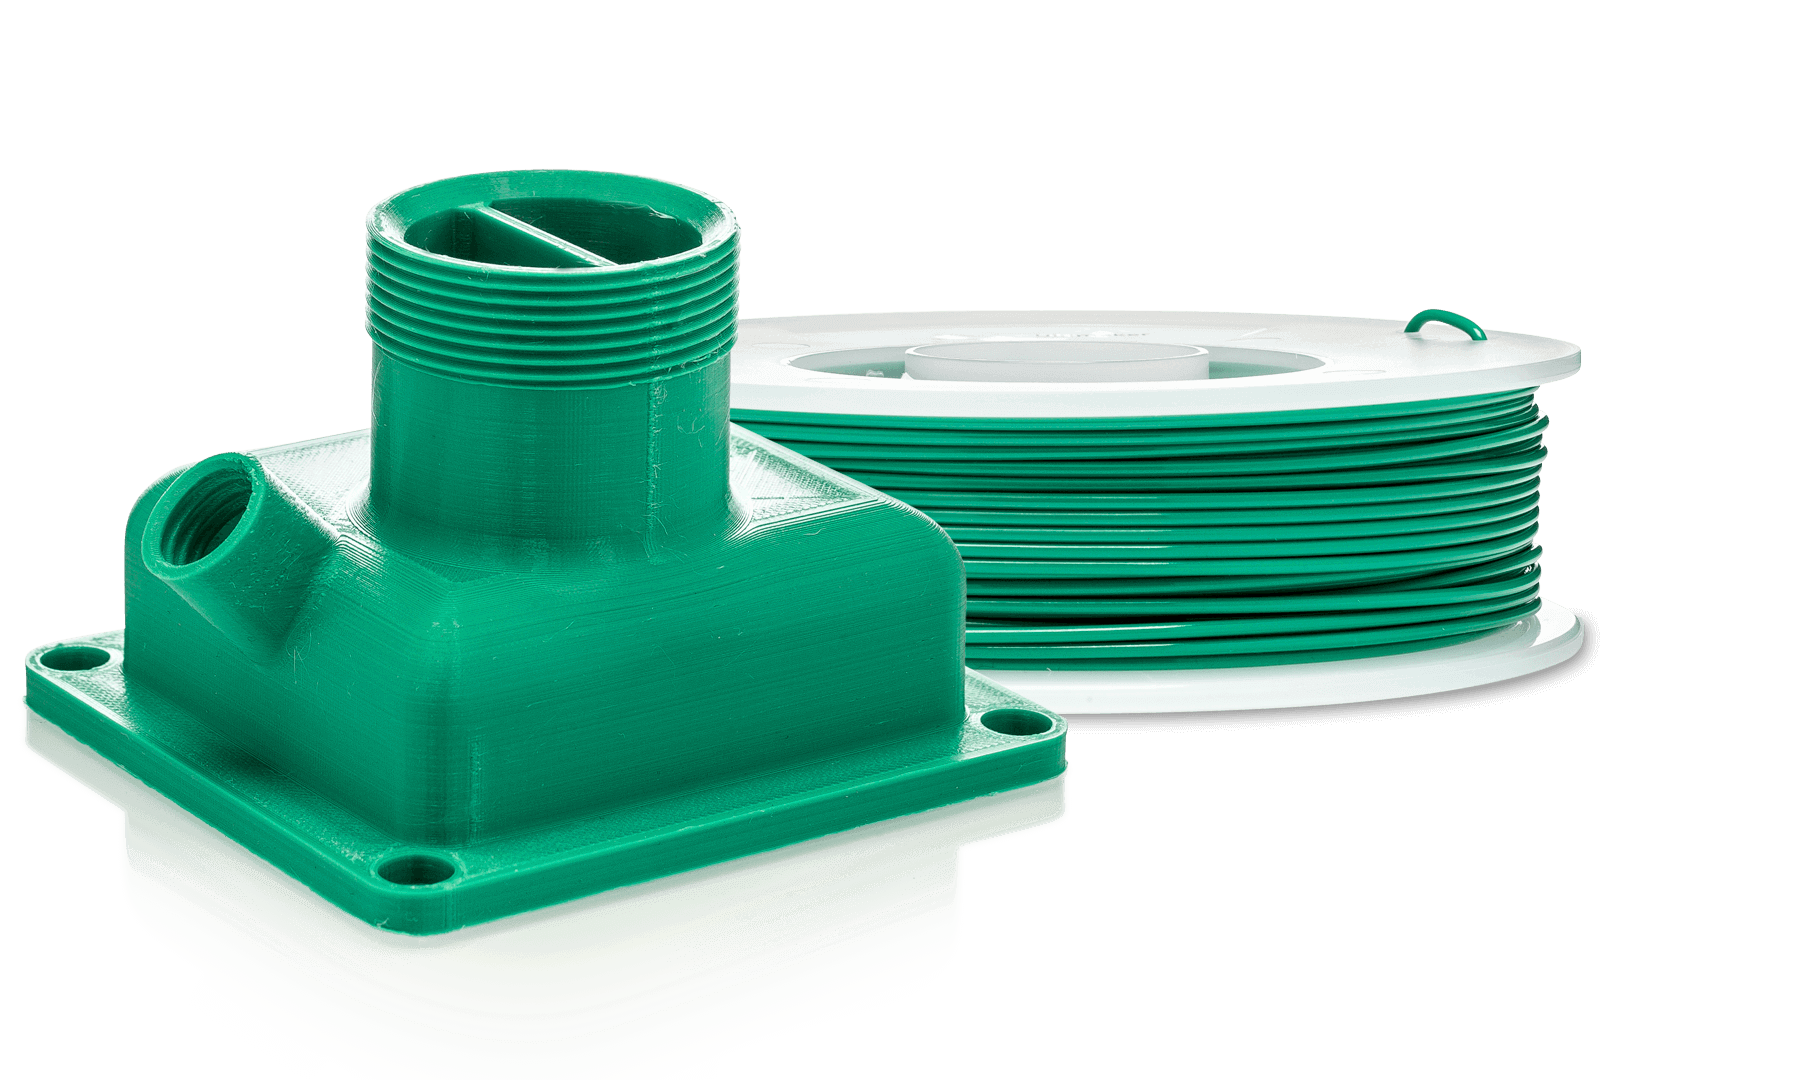 Ultimaker PETG Green filament prints